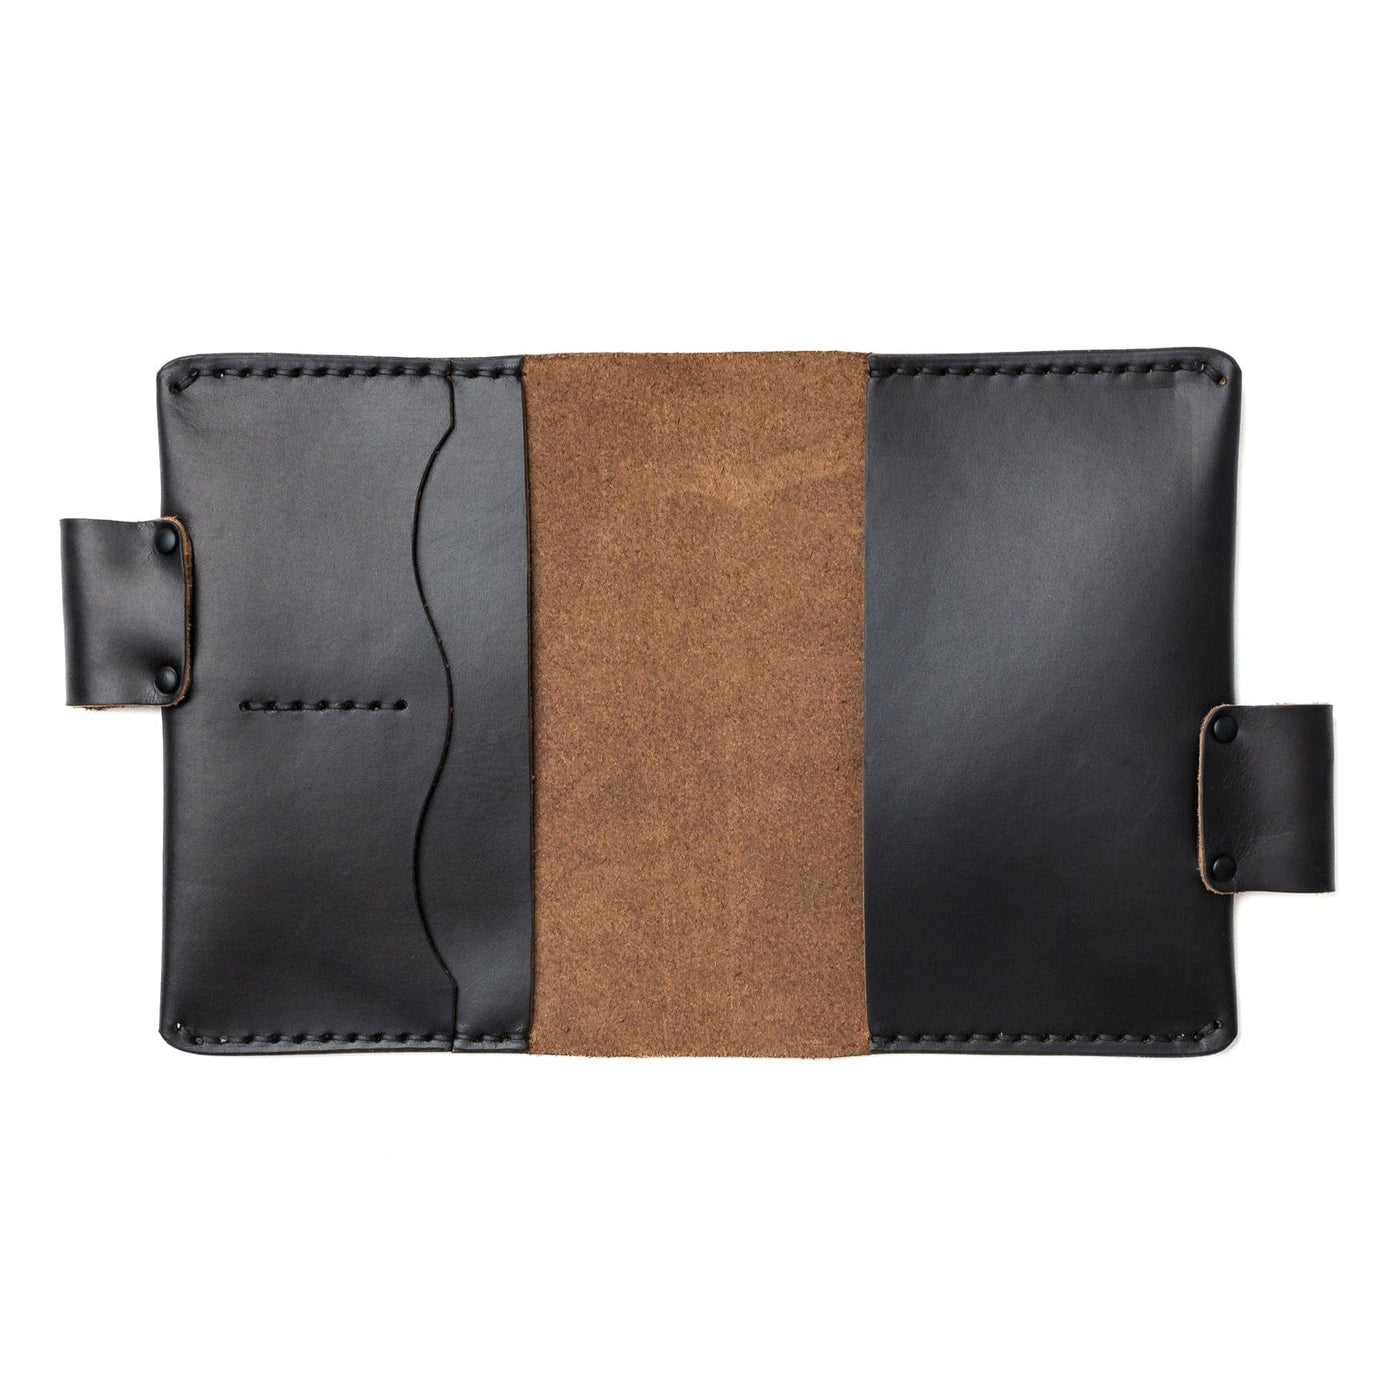 Leather Midori MD A6 Notebook Cover - Black Popov Leather